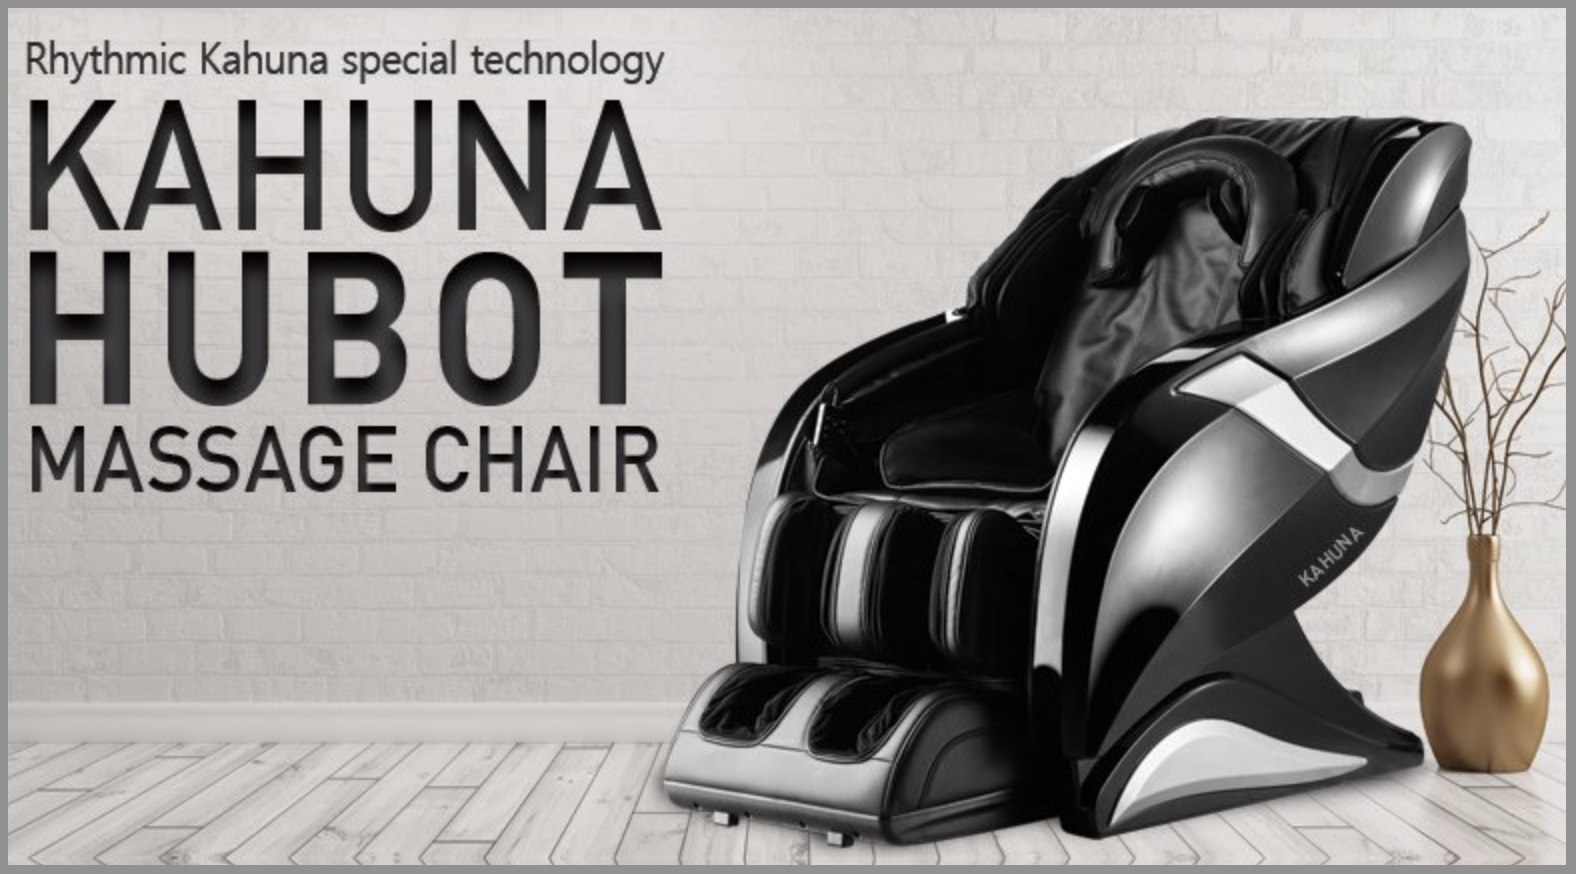 Kahuna Hubot HM-078 massage chair Review